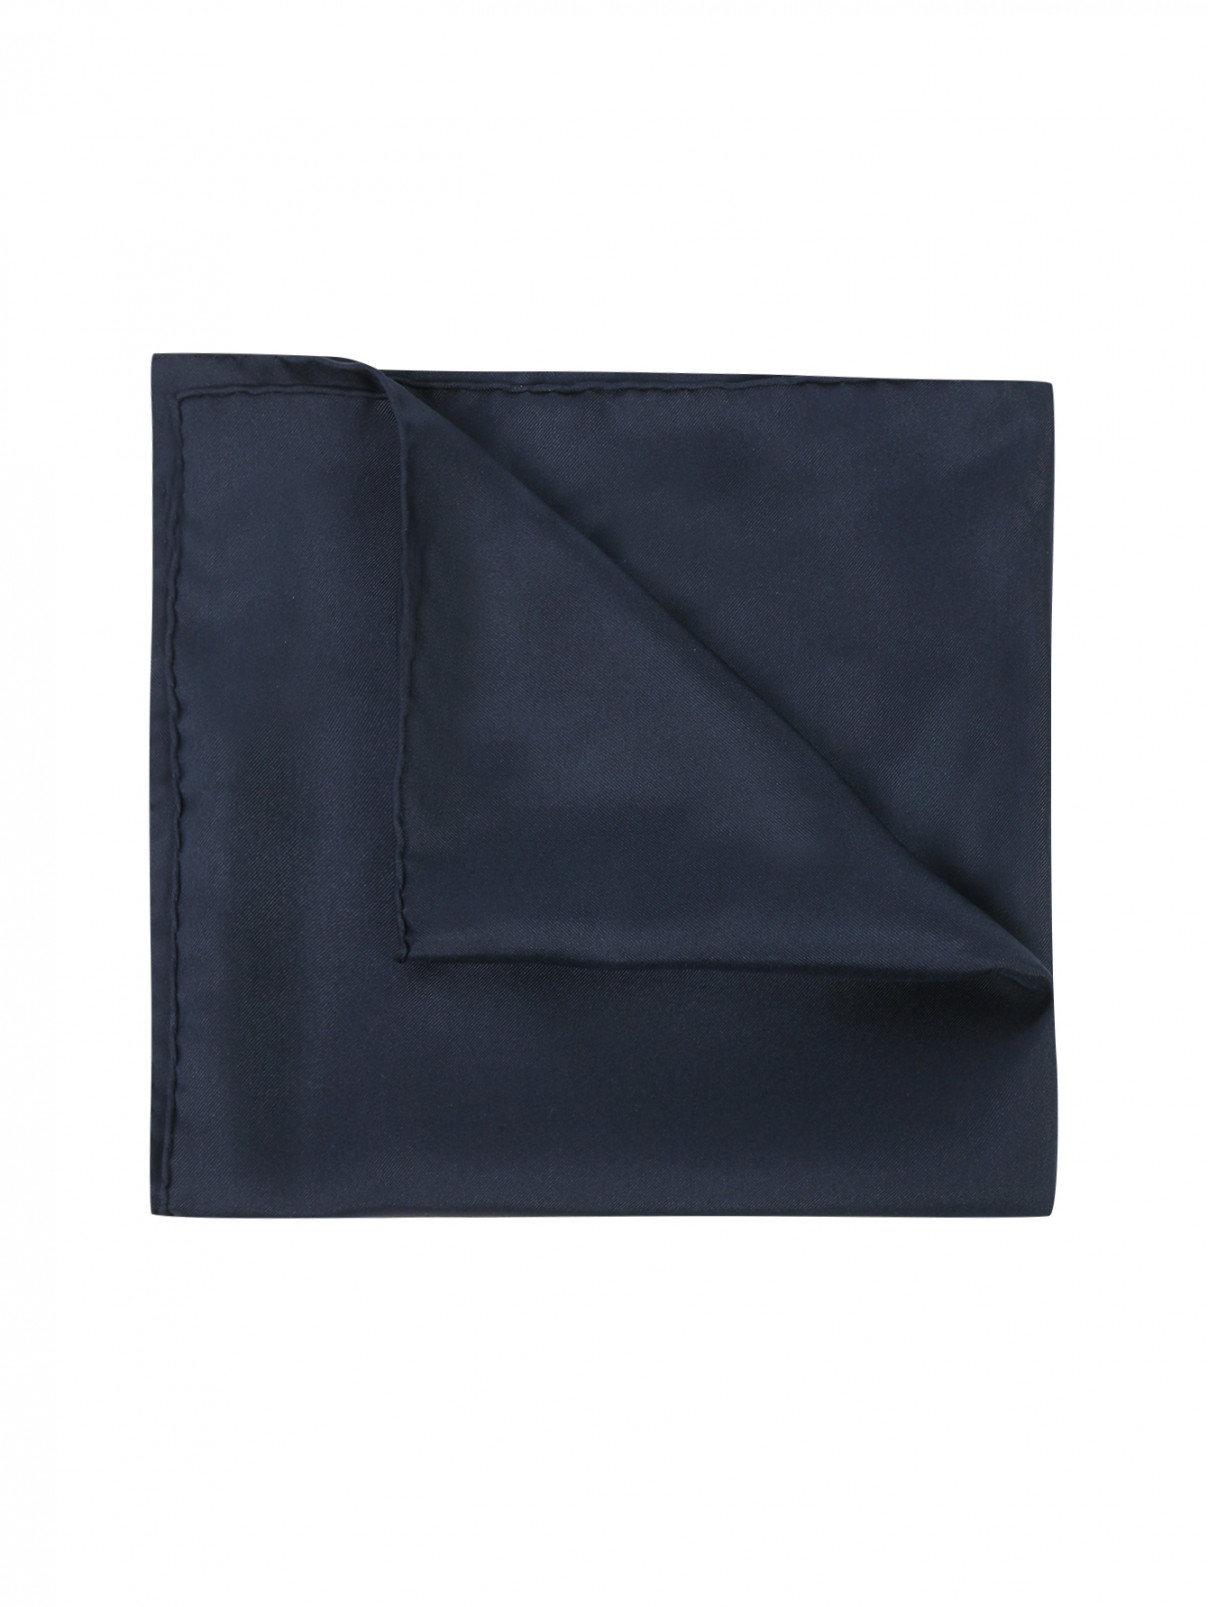 Платок из шелка Lanvin  –  Общий вид  – Цвет:  Синий